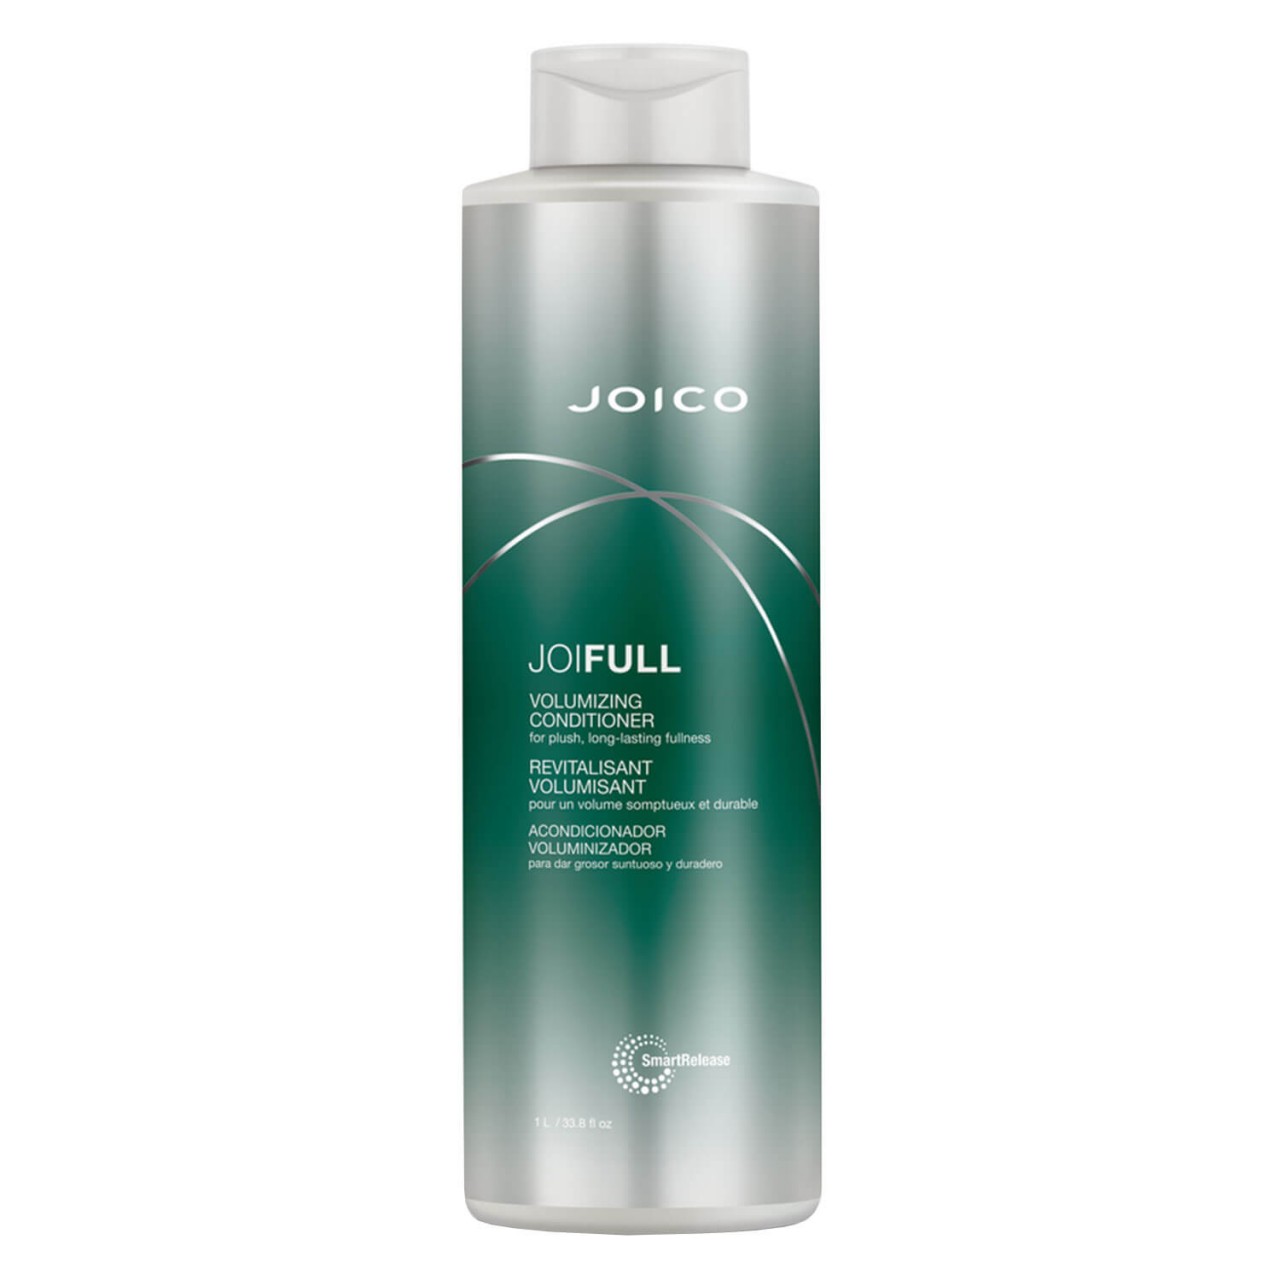 JoiFull - Volumizing Conditioner von Joico